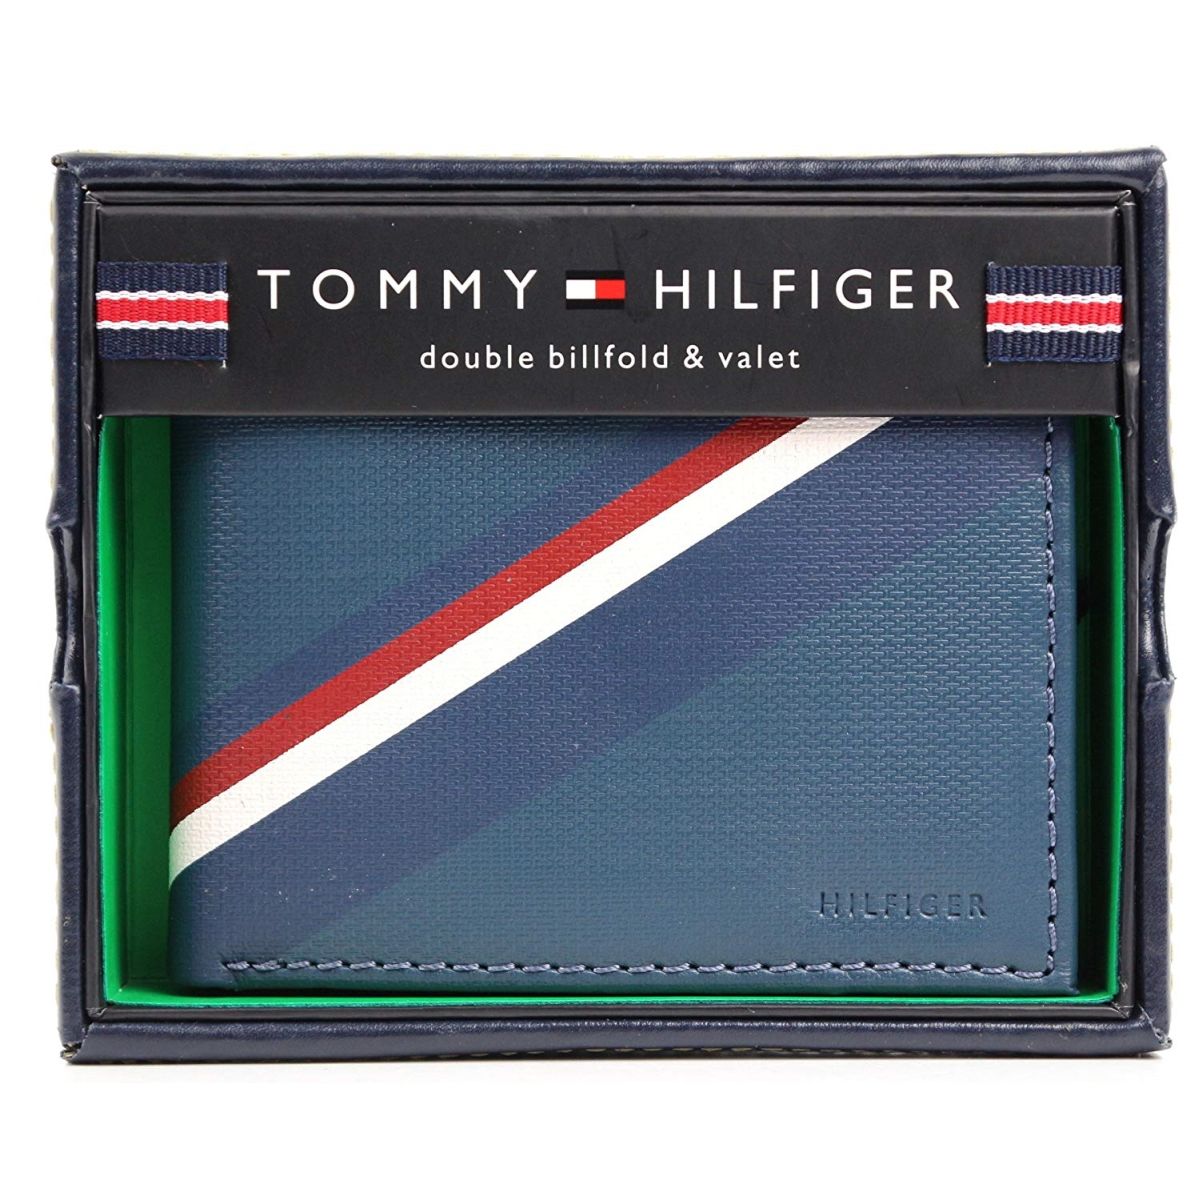 WALLET Tommy Hilfiger Leather Billfold Wallet - Navy